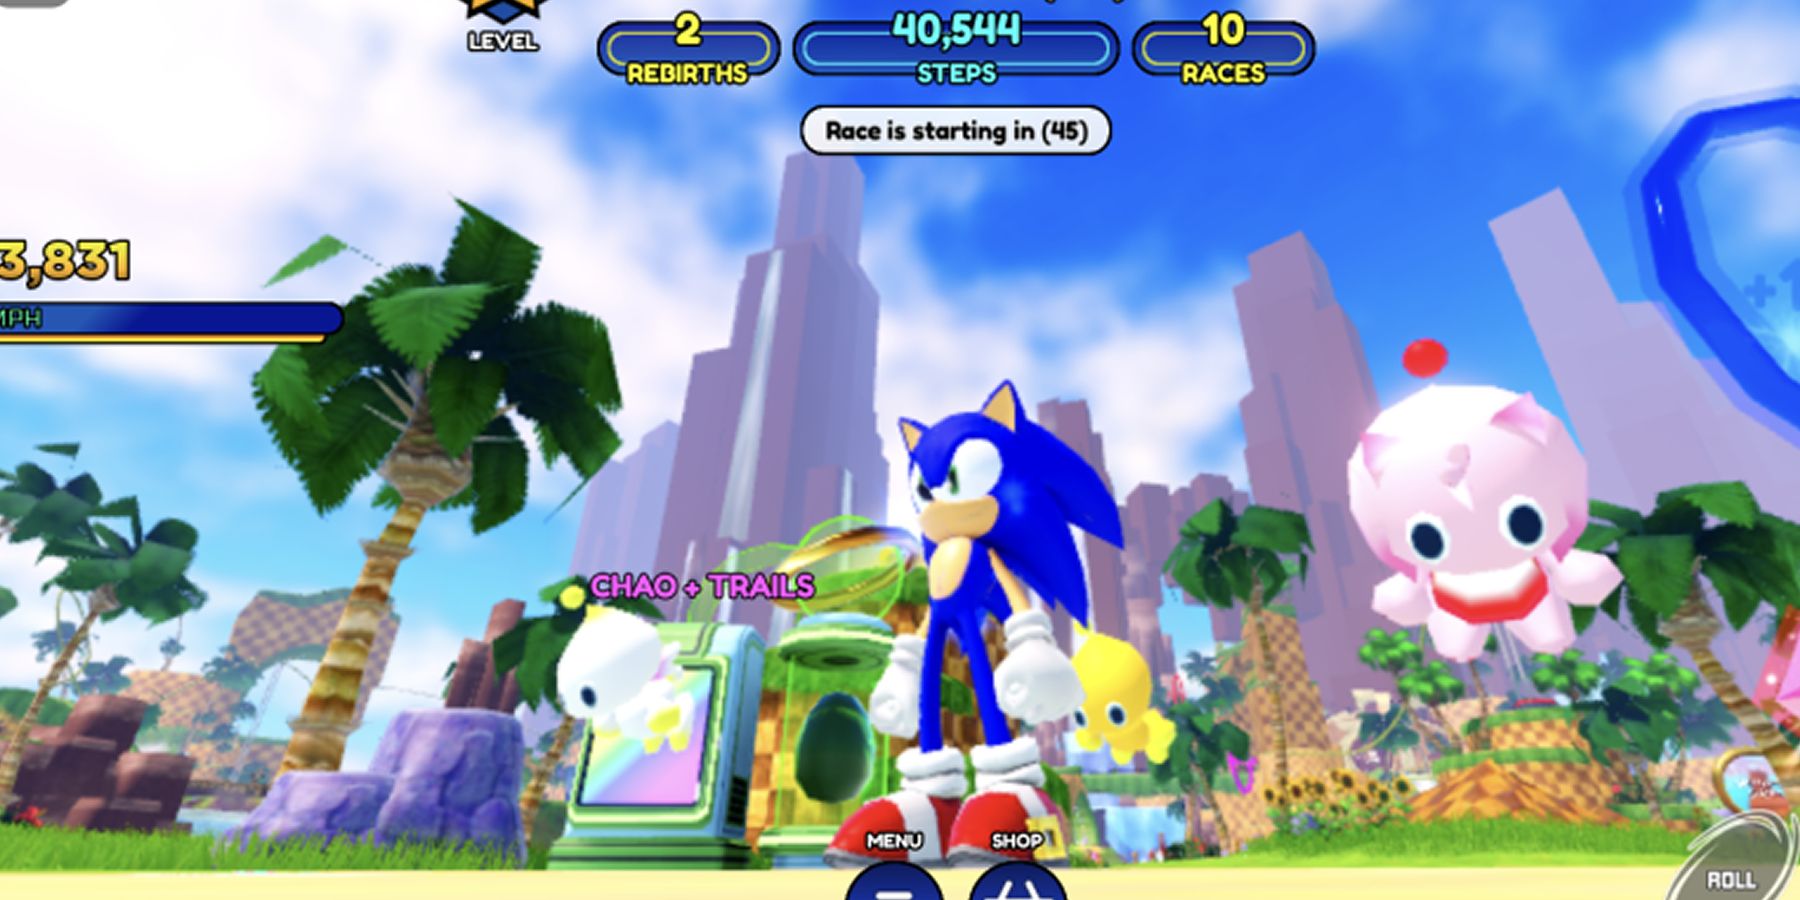 Sonic Speed Simulator: How to Unlock Sonic